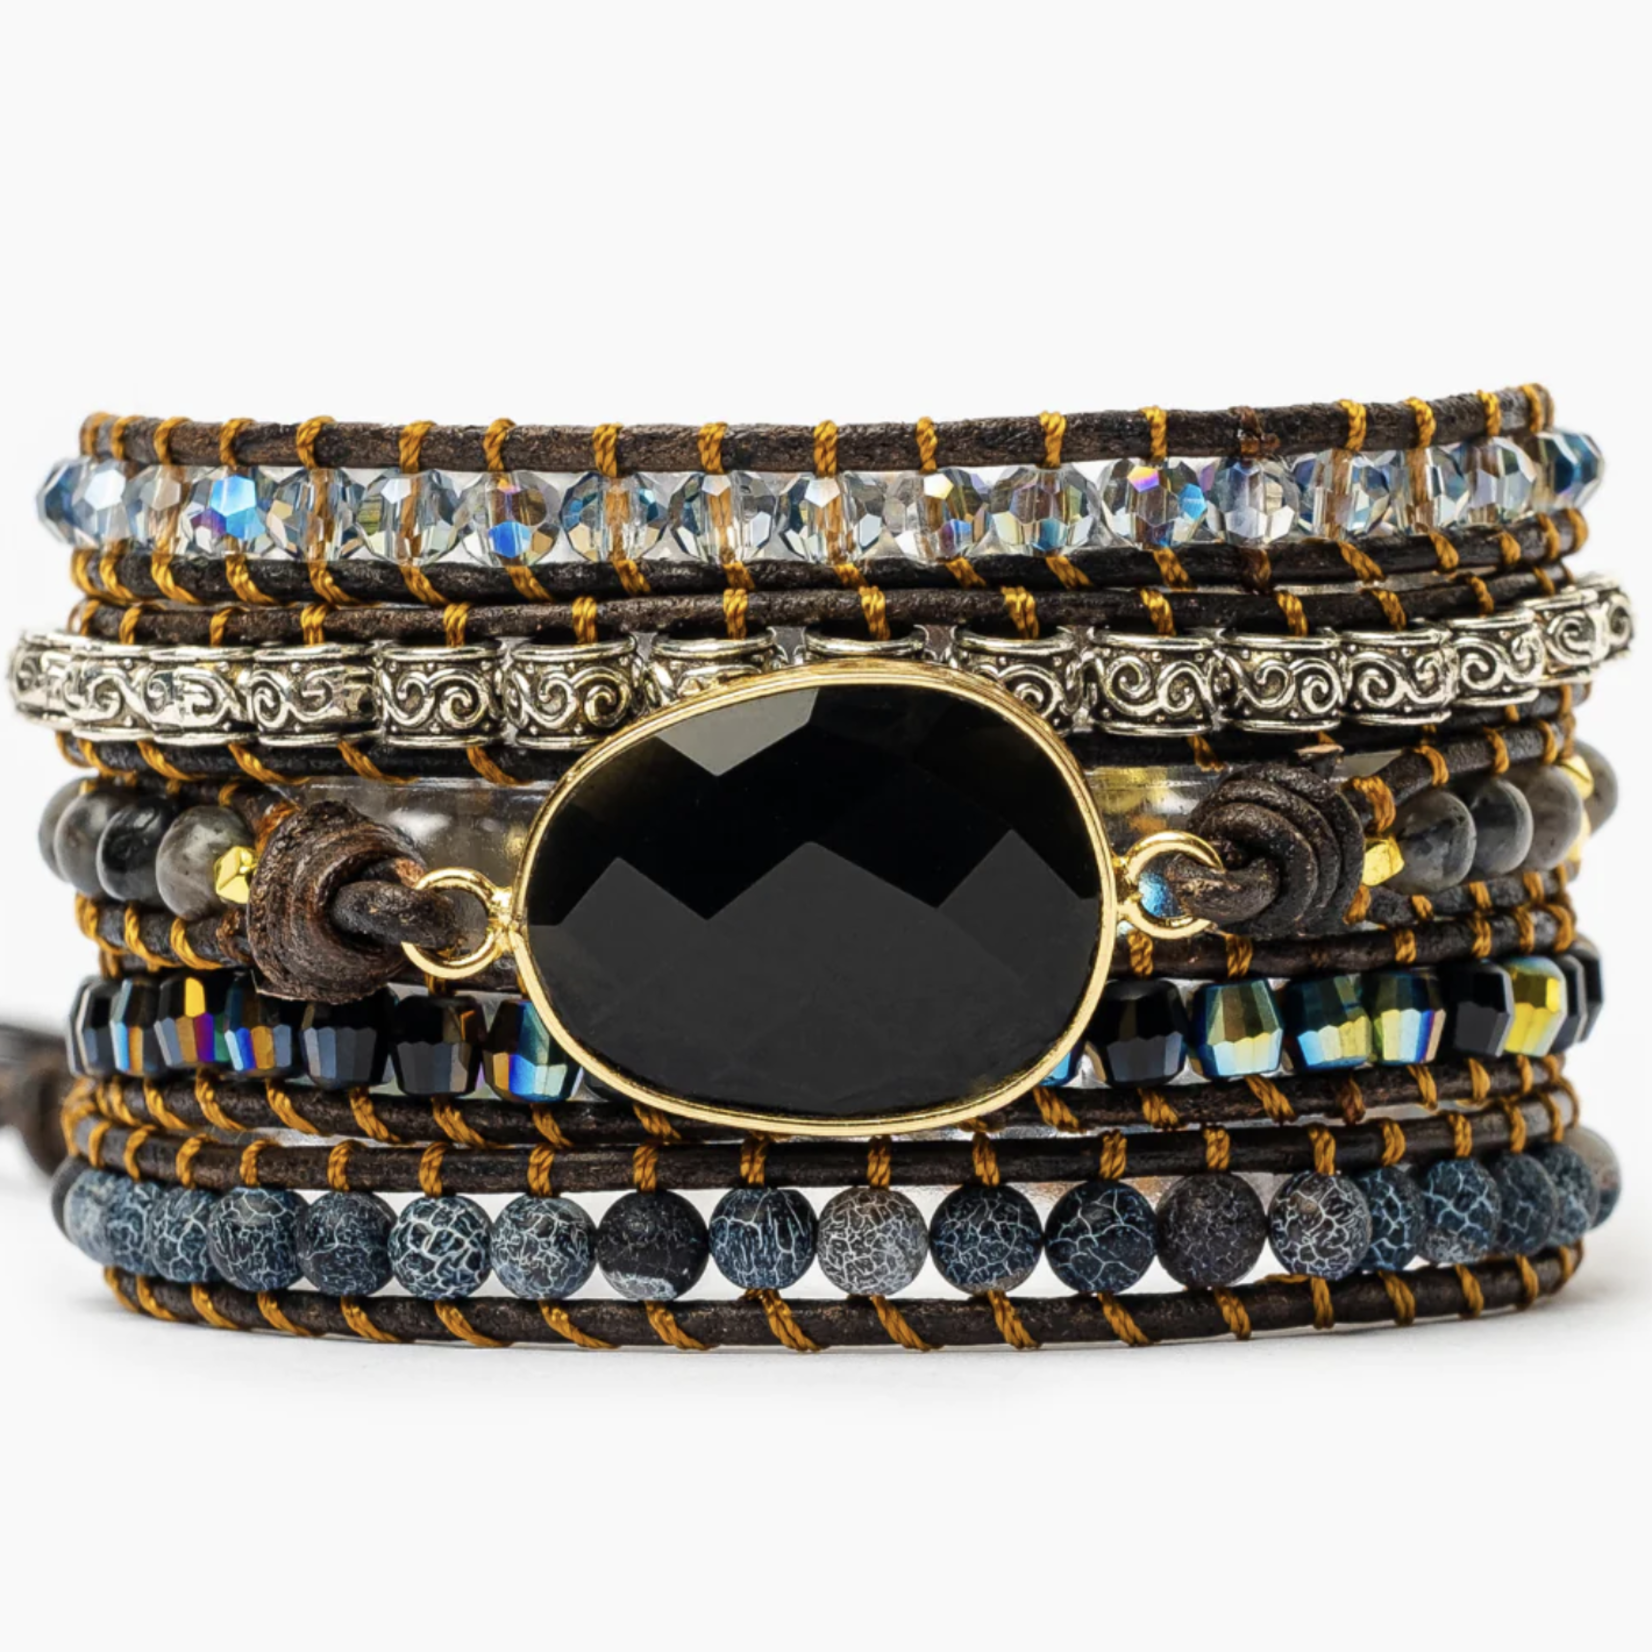 Onyx Moonlight Protection Wrap Bracelet